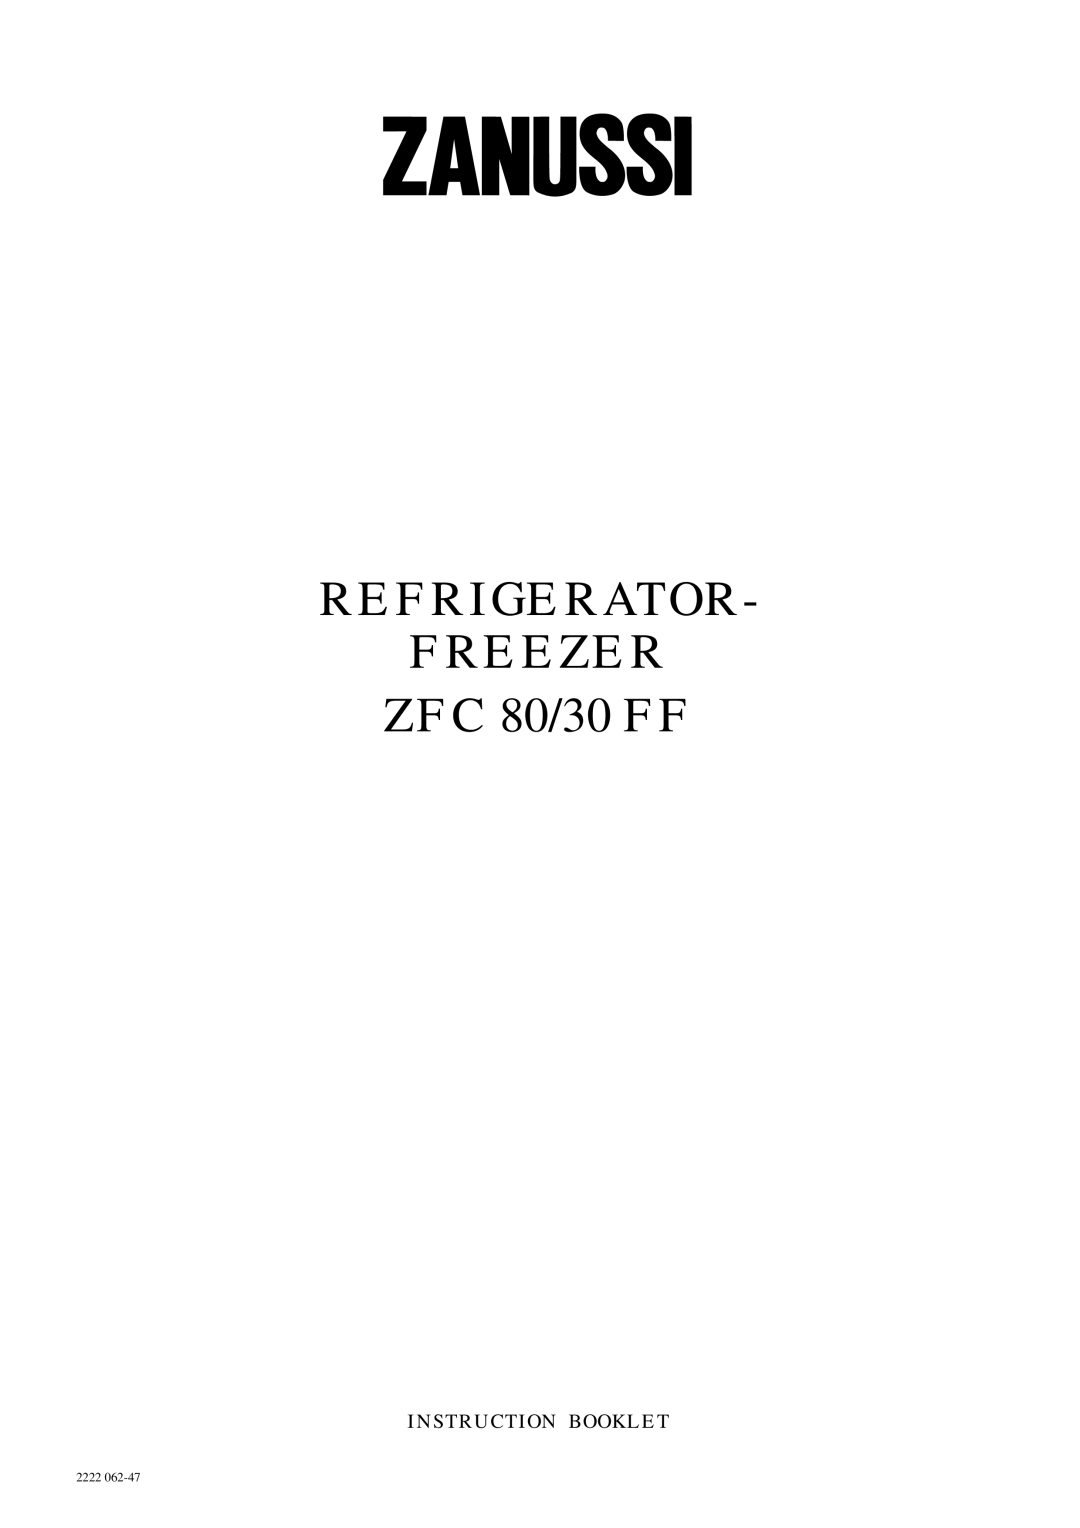 Zanussi manual REFRIGERATOR FREEZER ZFC 80/30 FF, Instruction Booklet, 2222 